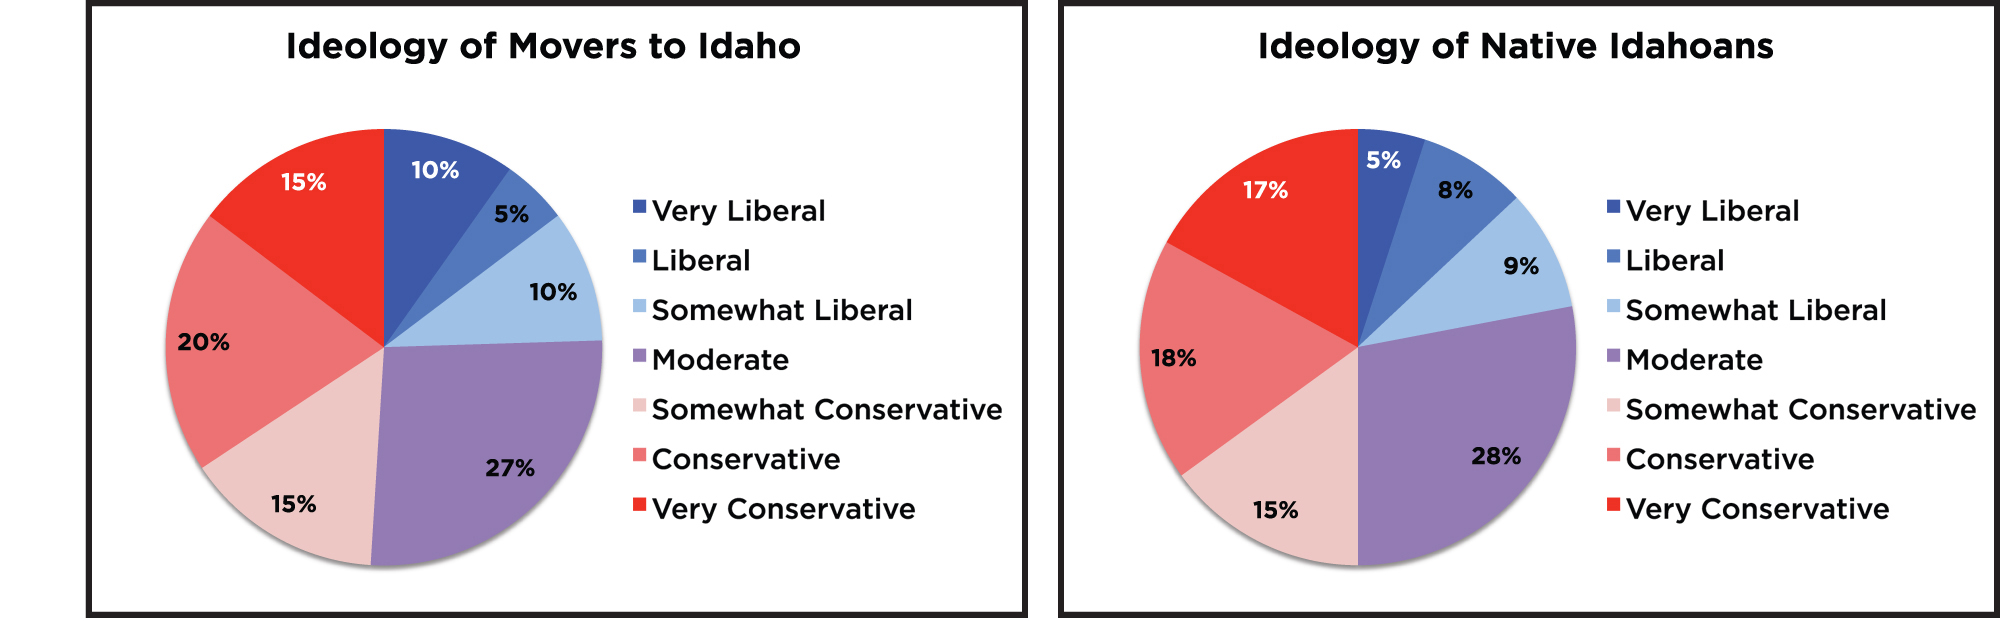 Ideology of movers vs native Idahoans, pie charts